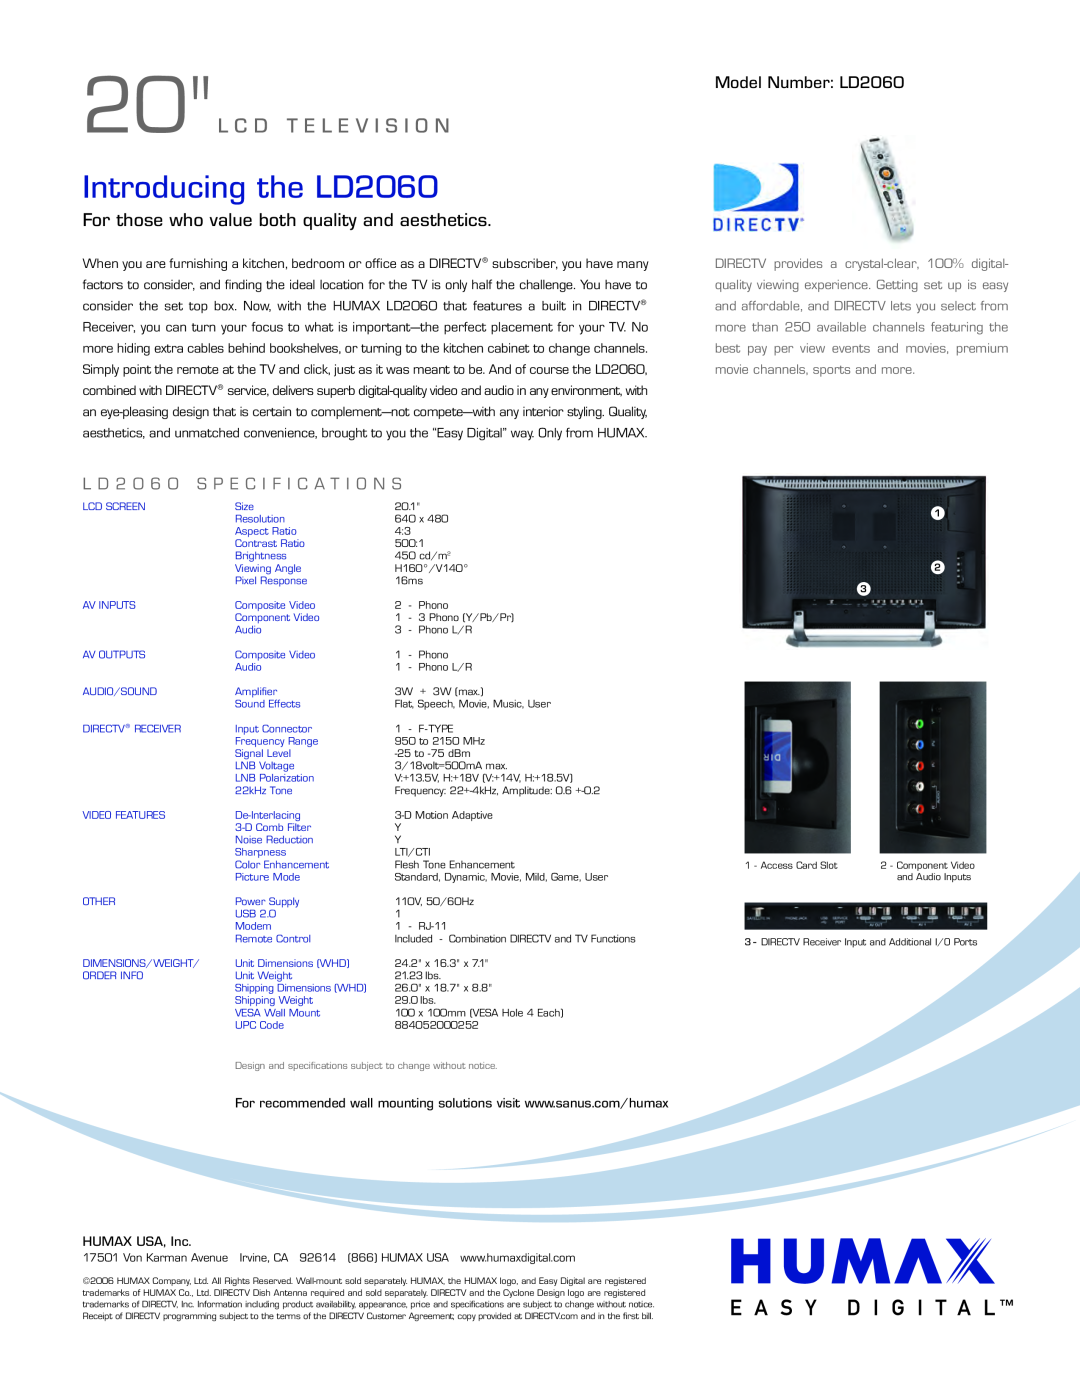 Humax LD-2060 manual Introducing the LD2060, 20L C D T E L E V I S I O N, For those who value both quality and aesthetics 